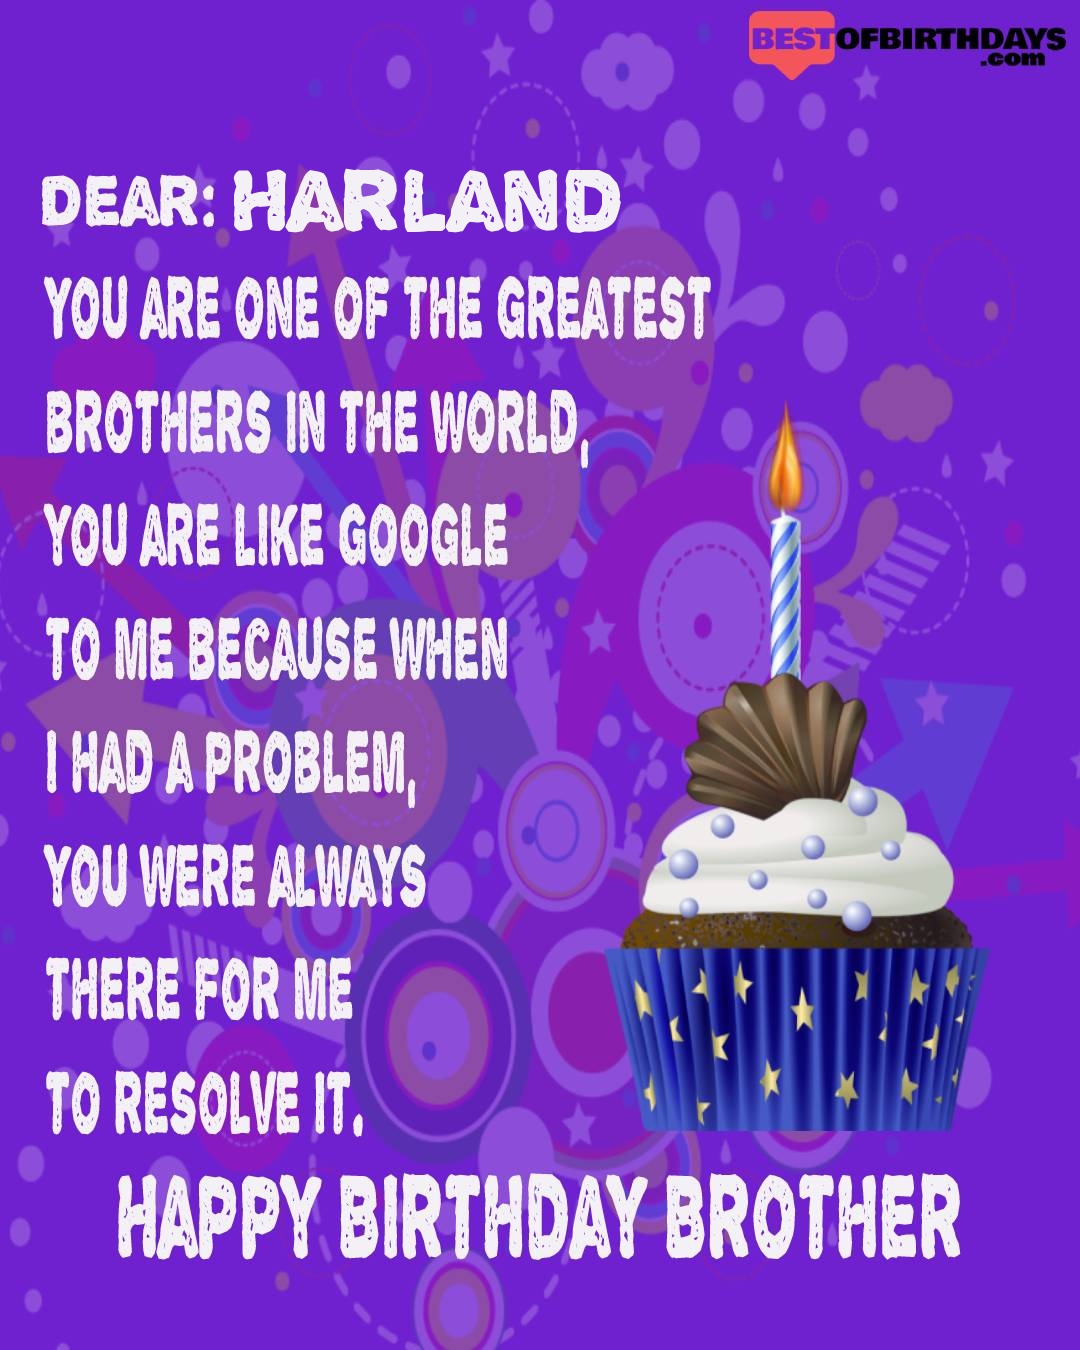 Happy birthday harland bhai brother bro